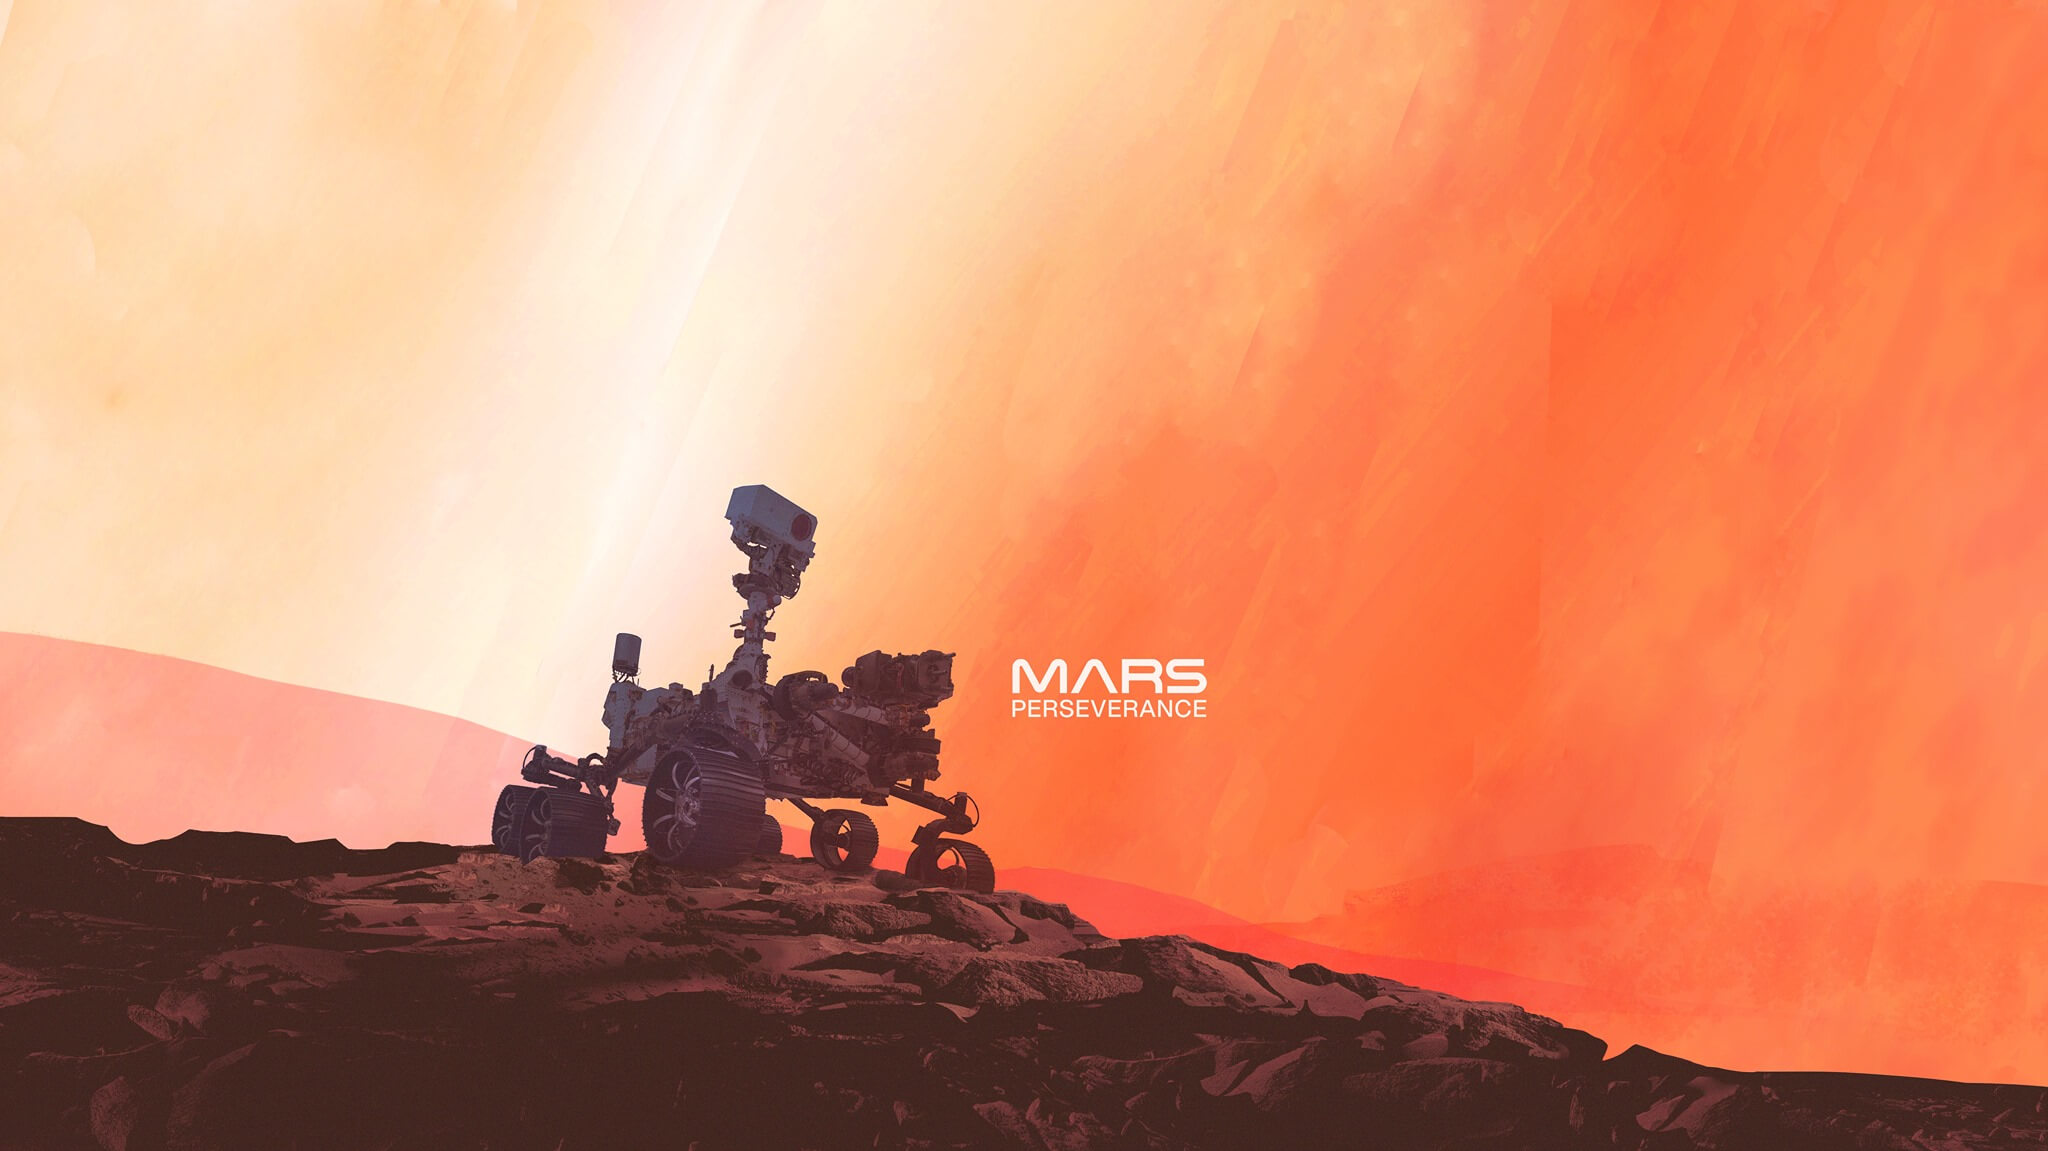 NASA Perseverance Mars Rover landing - Live in VR